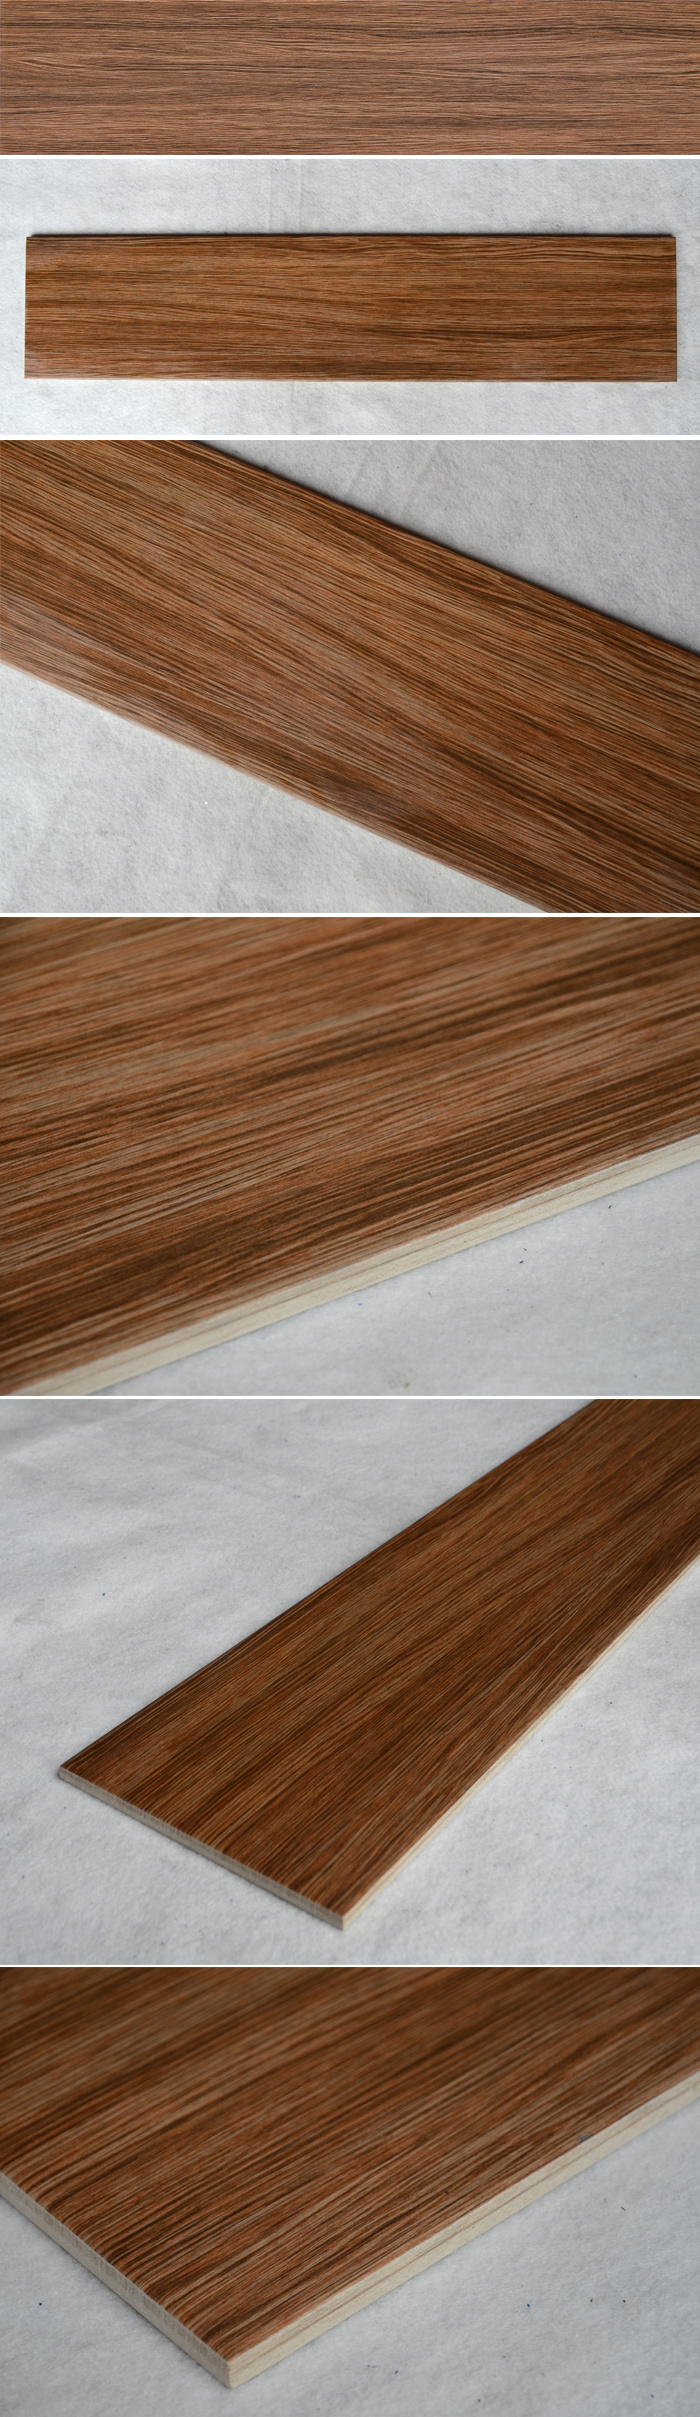 Wood Ceramic Floor, Wood Design Tiles, Wood Wall Tile